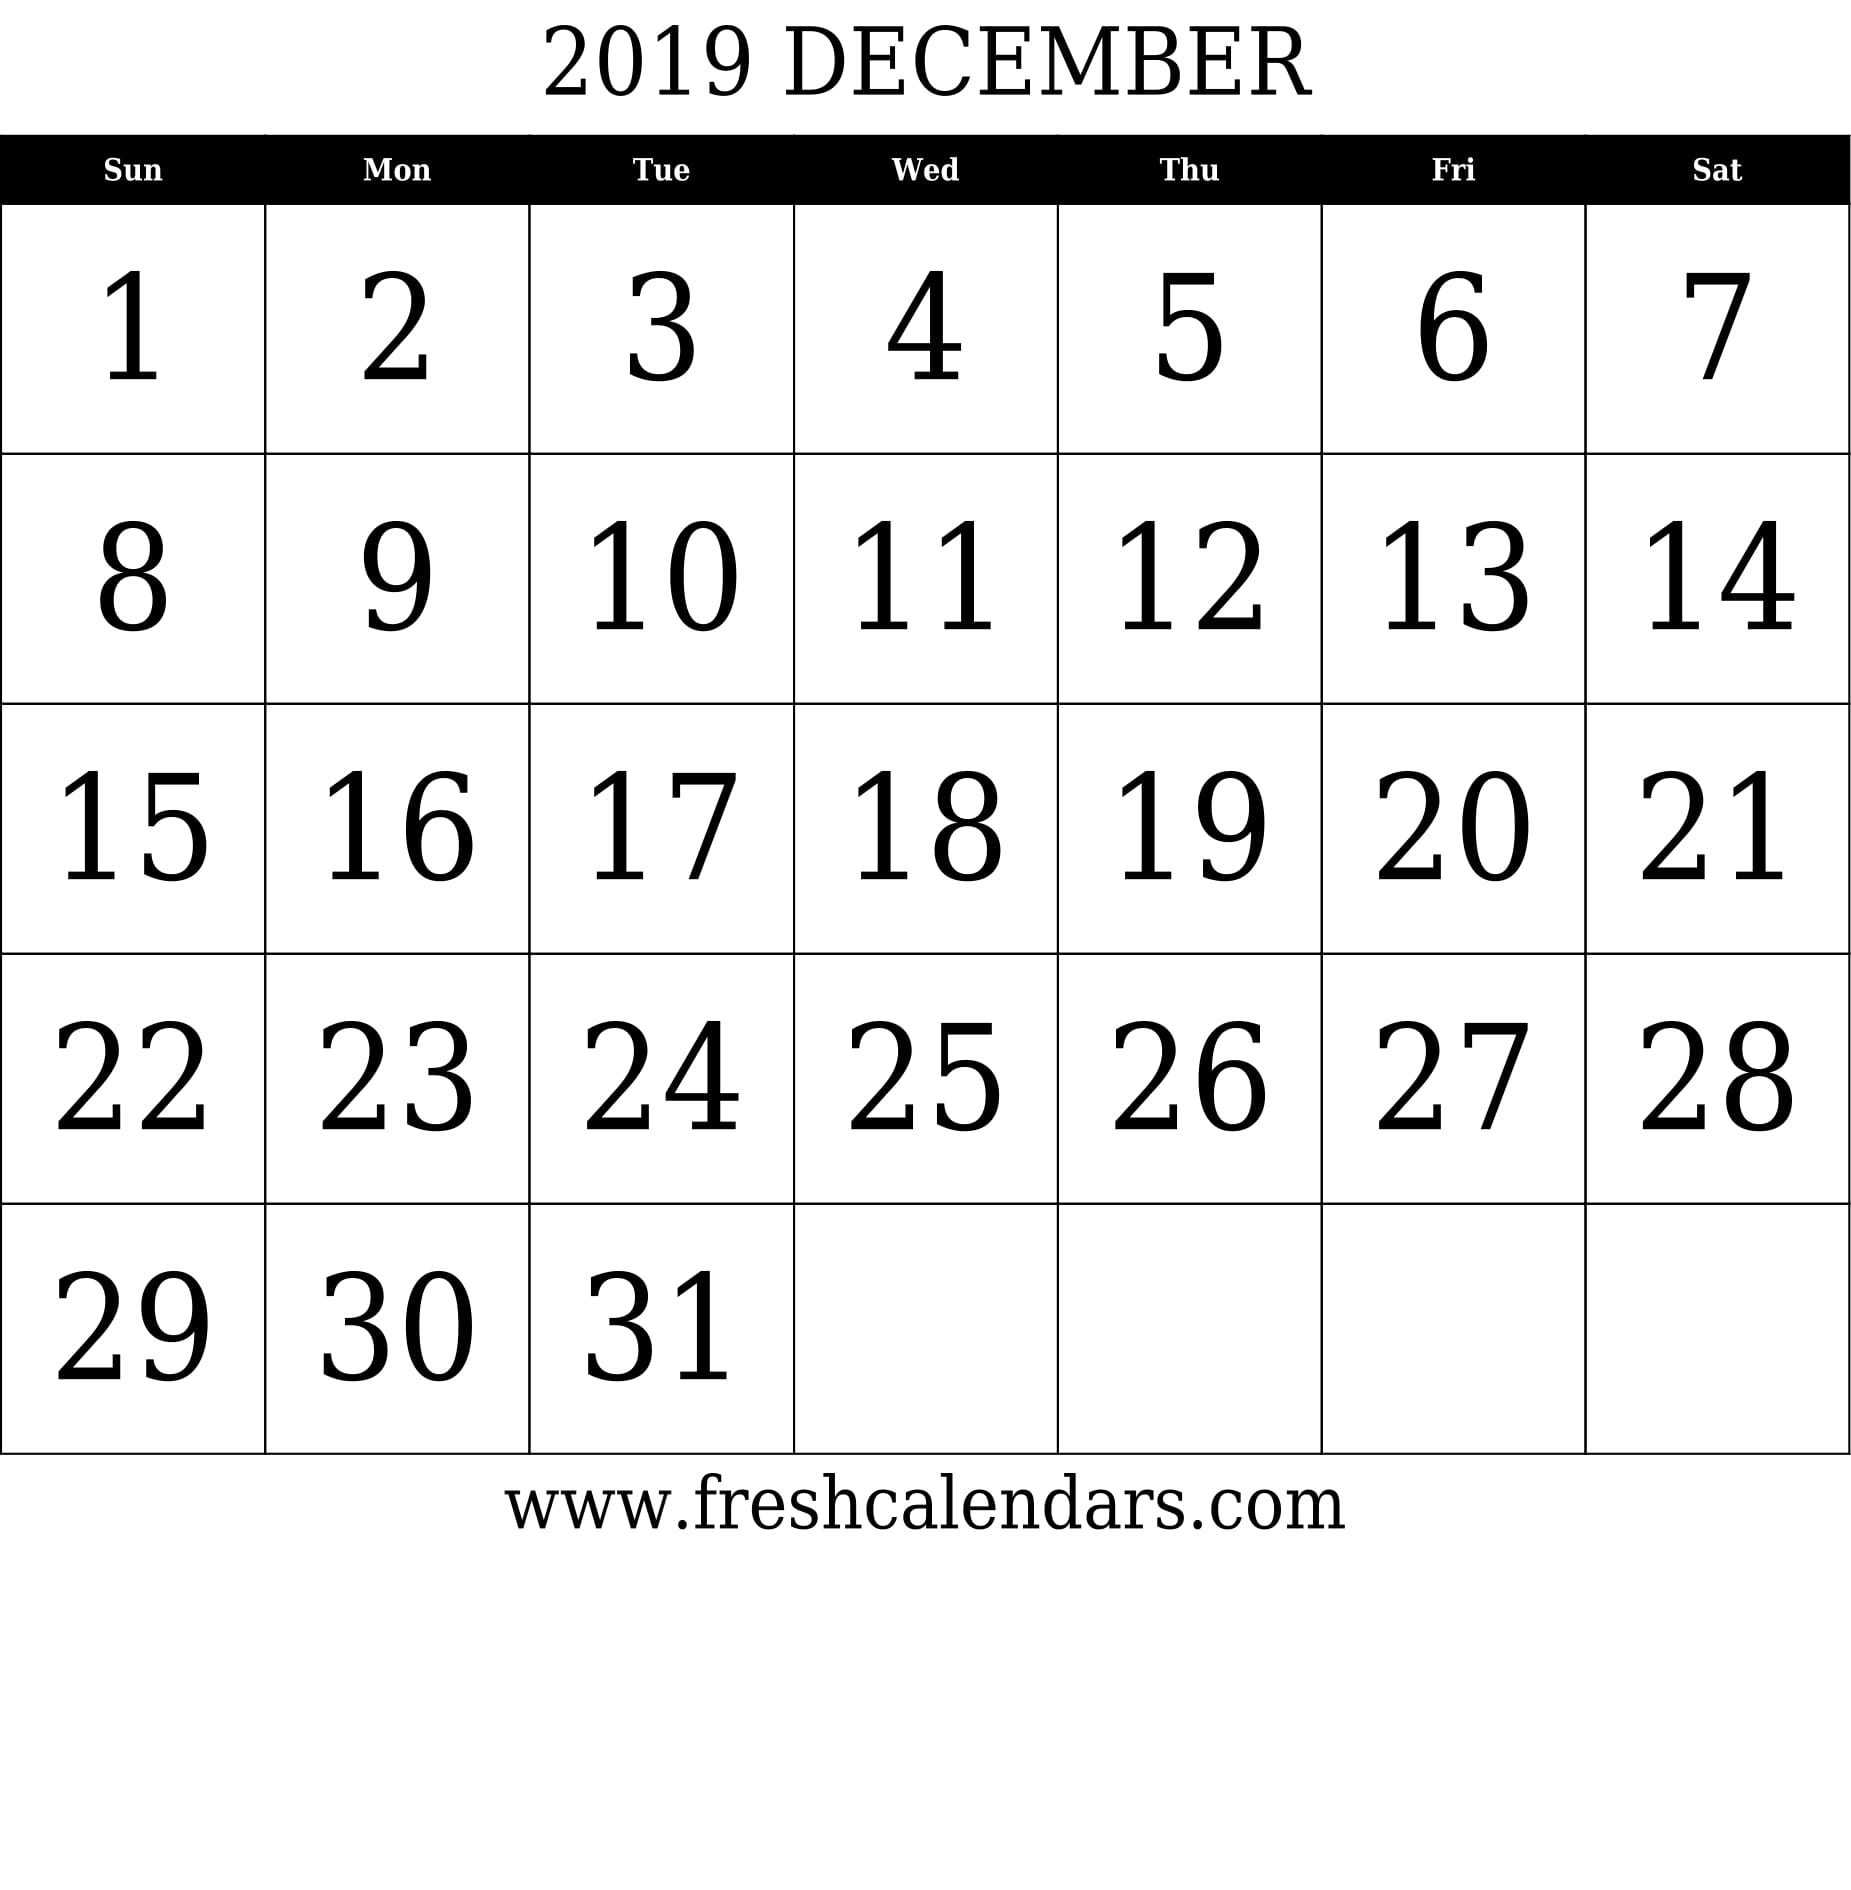 December 2019 Calendar With Large Dates